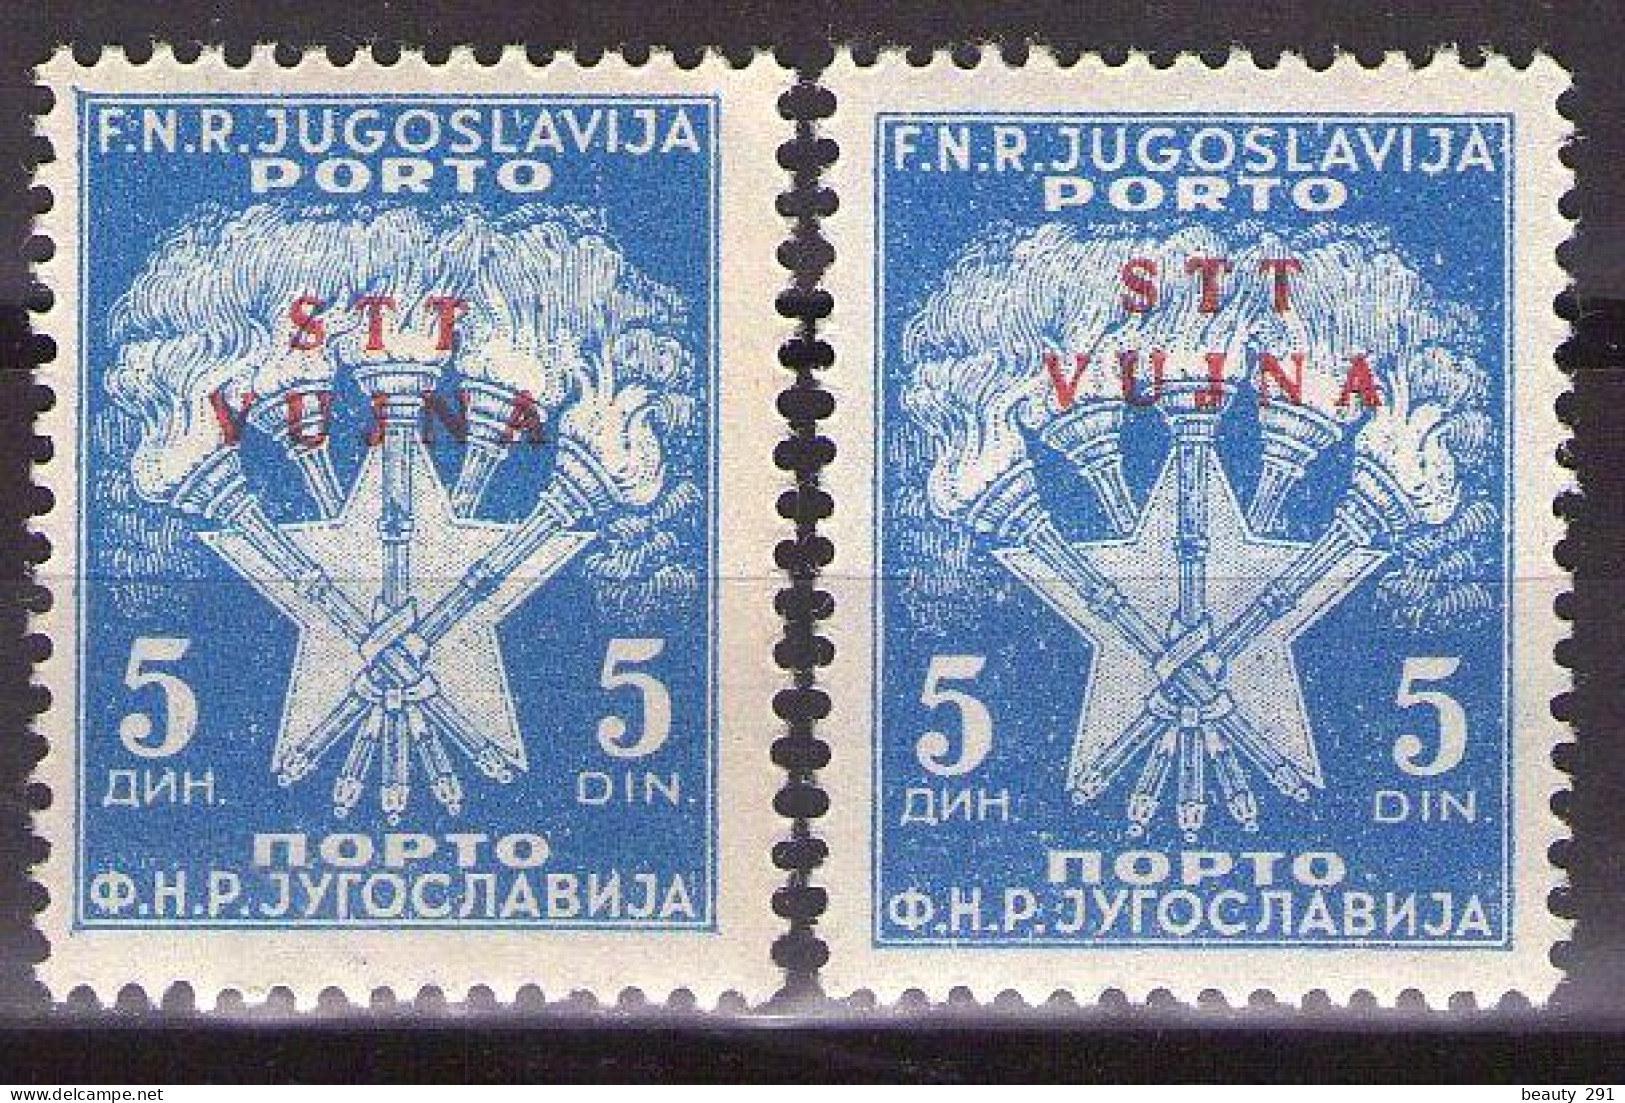 ITALIA - Trieste-Zona B -1952 - Mi 13 X 2 - POSTAGE DUE - MNH**VF - Postage Due